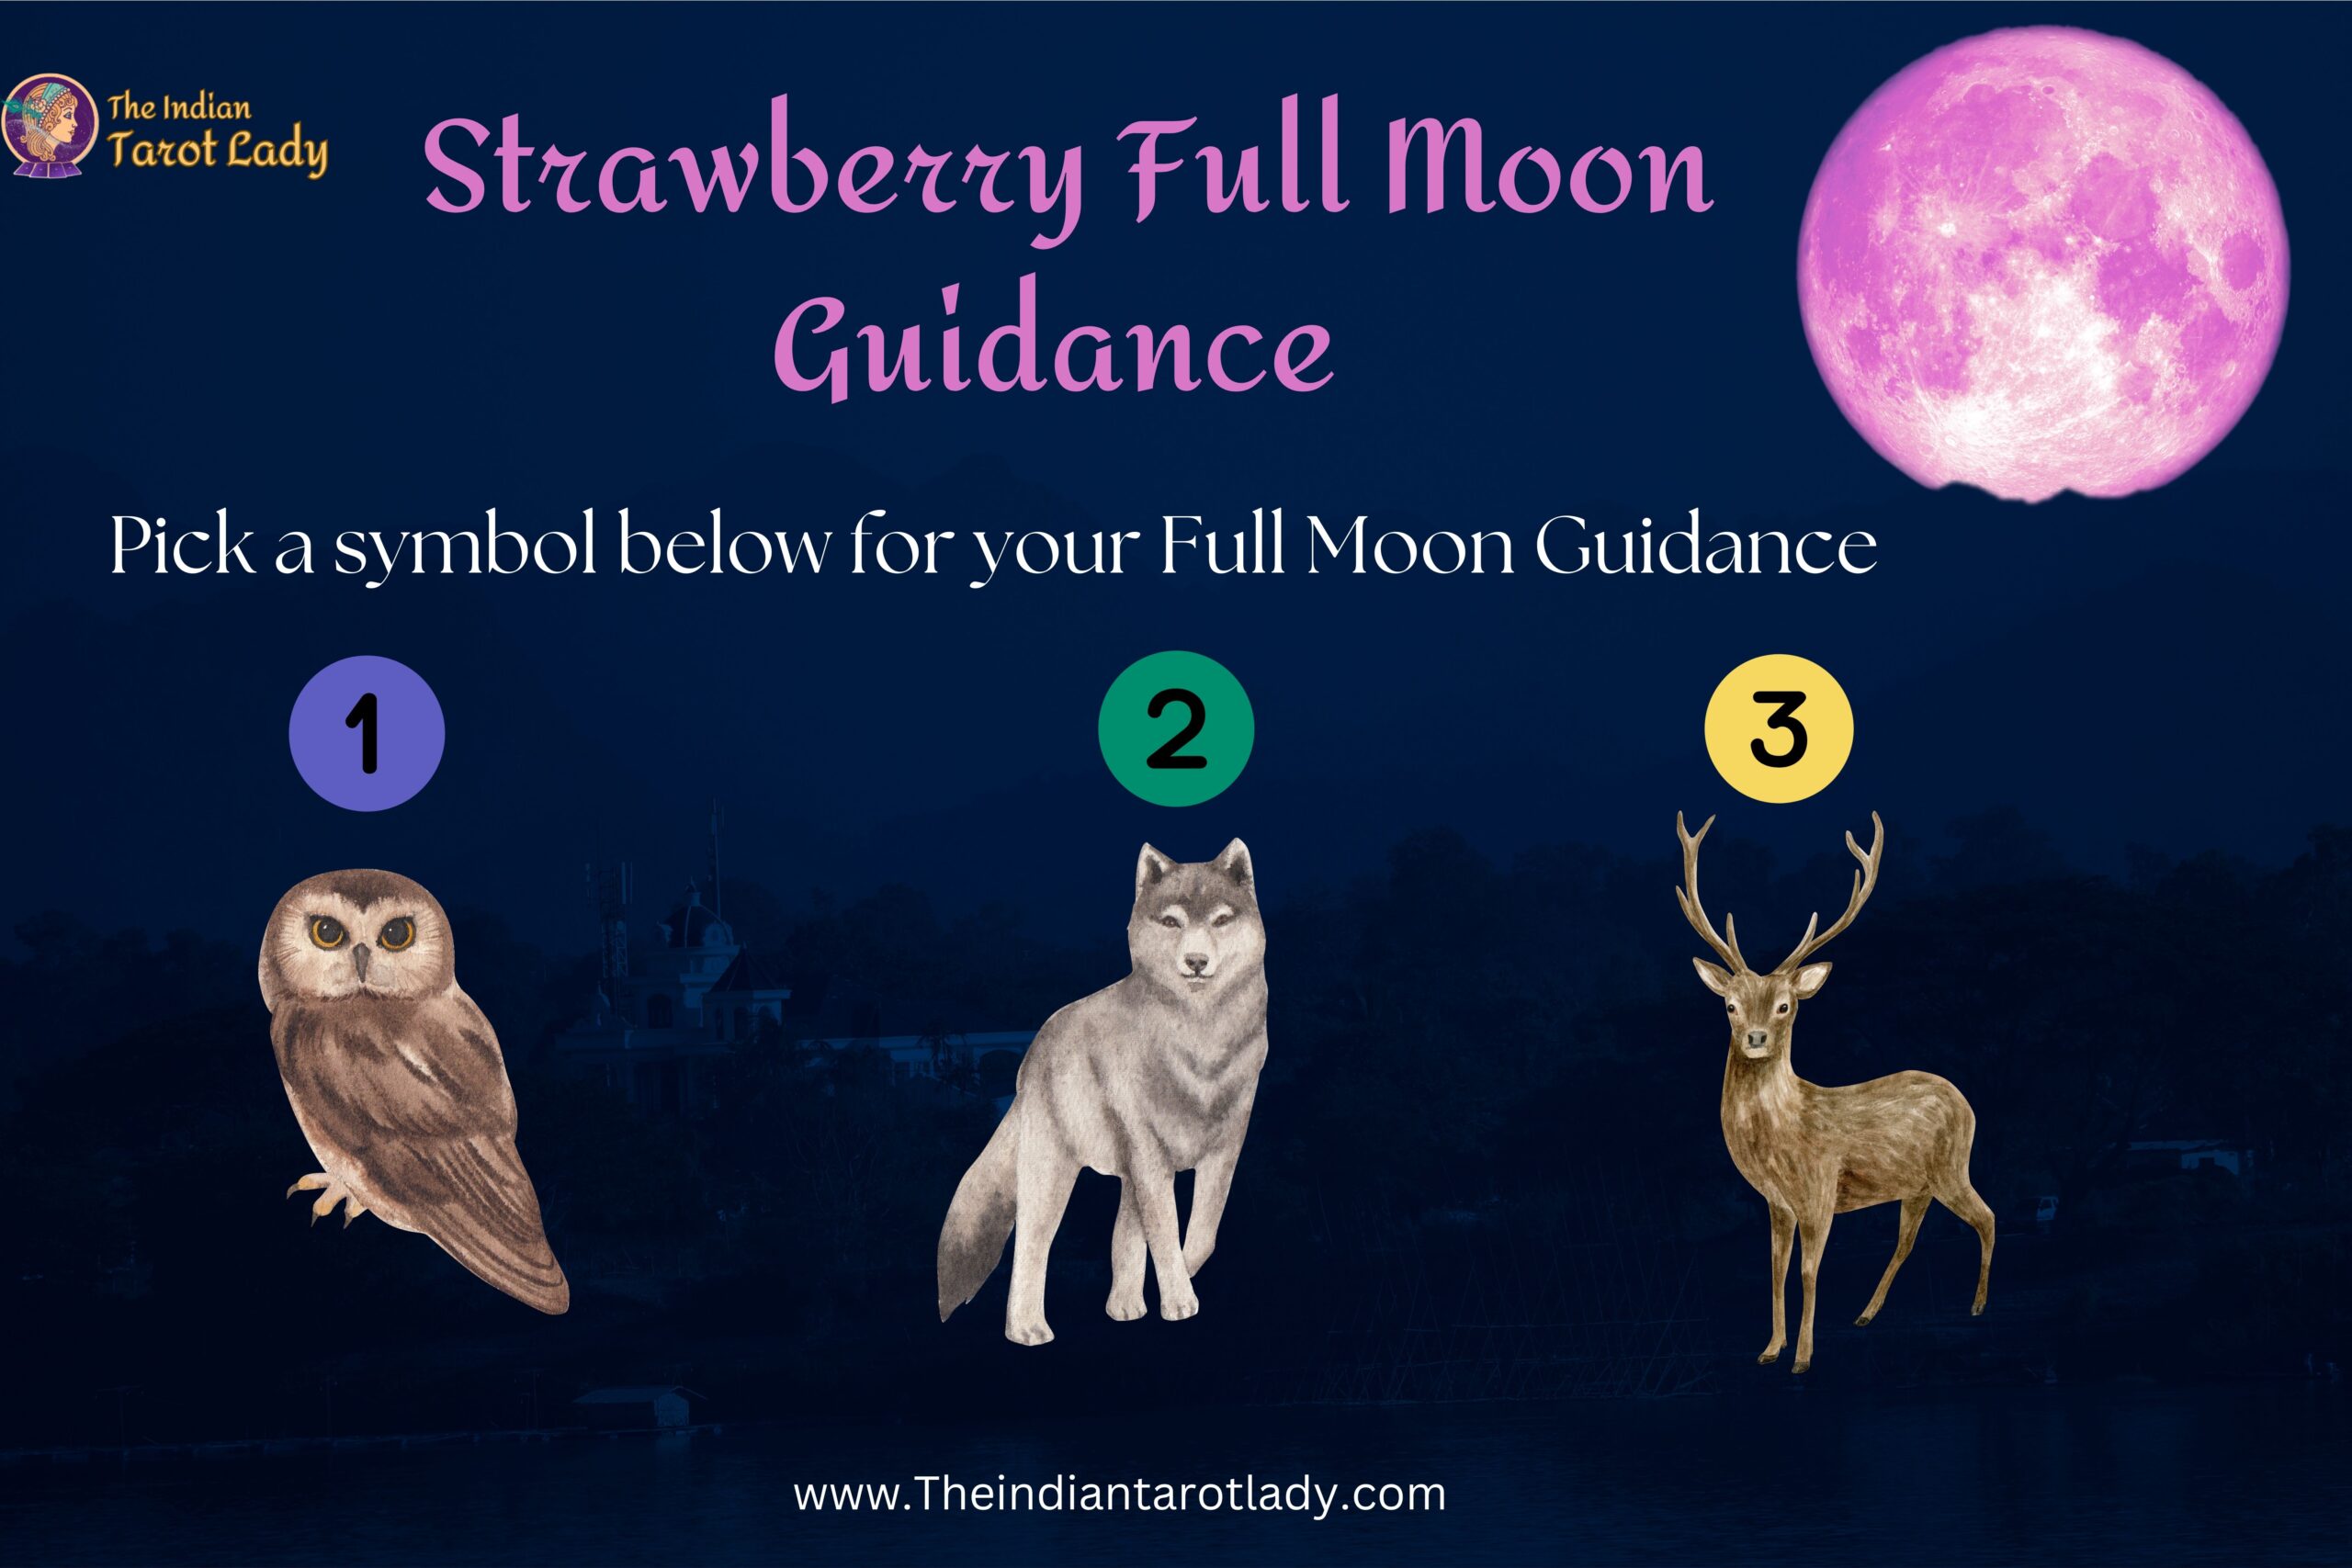 Strawberry Full Moon - The Indian Tarot Lady